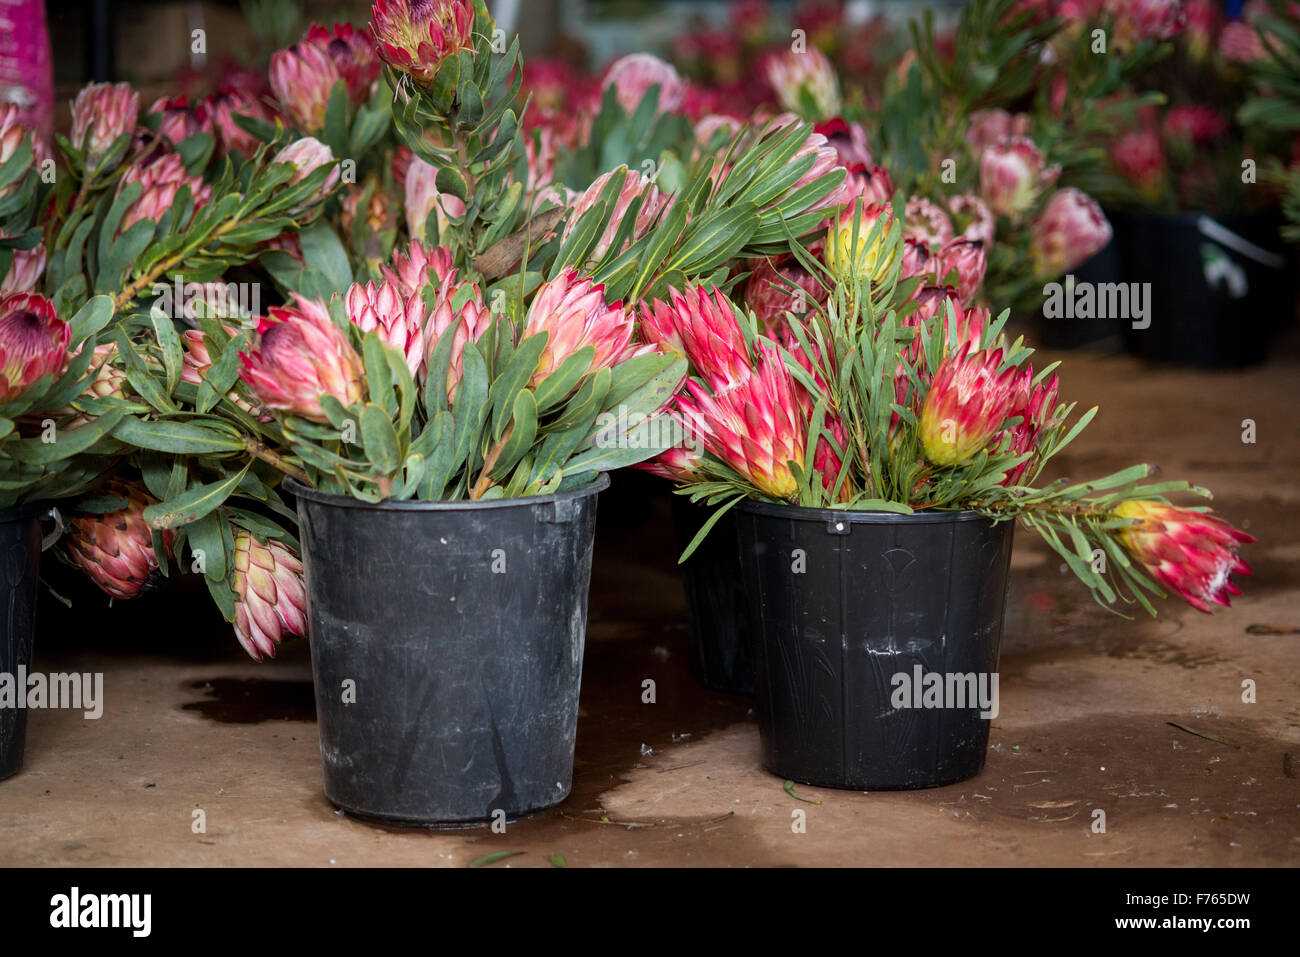 Sud Africa - Dettaglio del "Doornkraal" Protea pianta flowering. Foto Stock